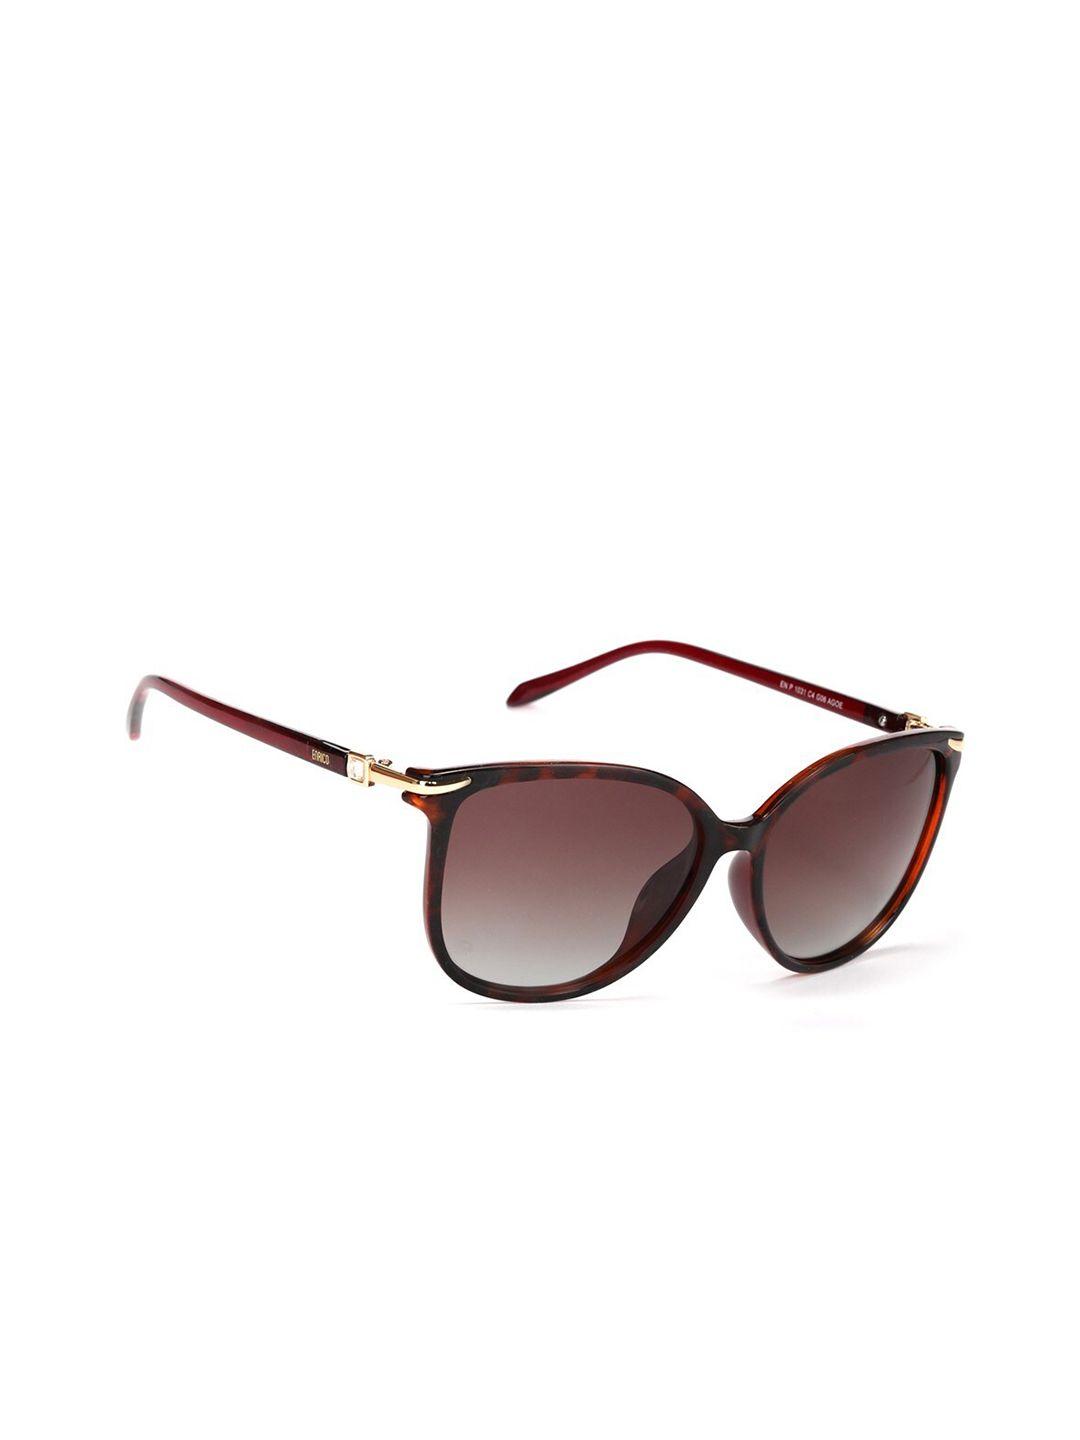 enrico women brown lens & red wayfarer sunglasses - en p 1031 c4-red